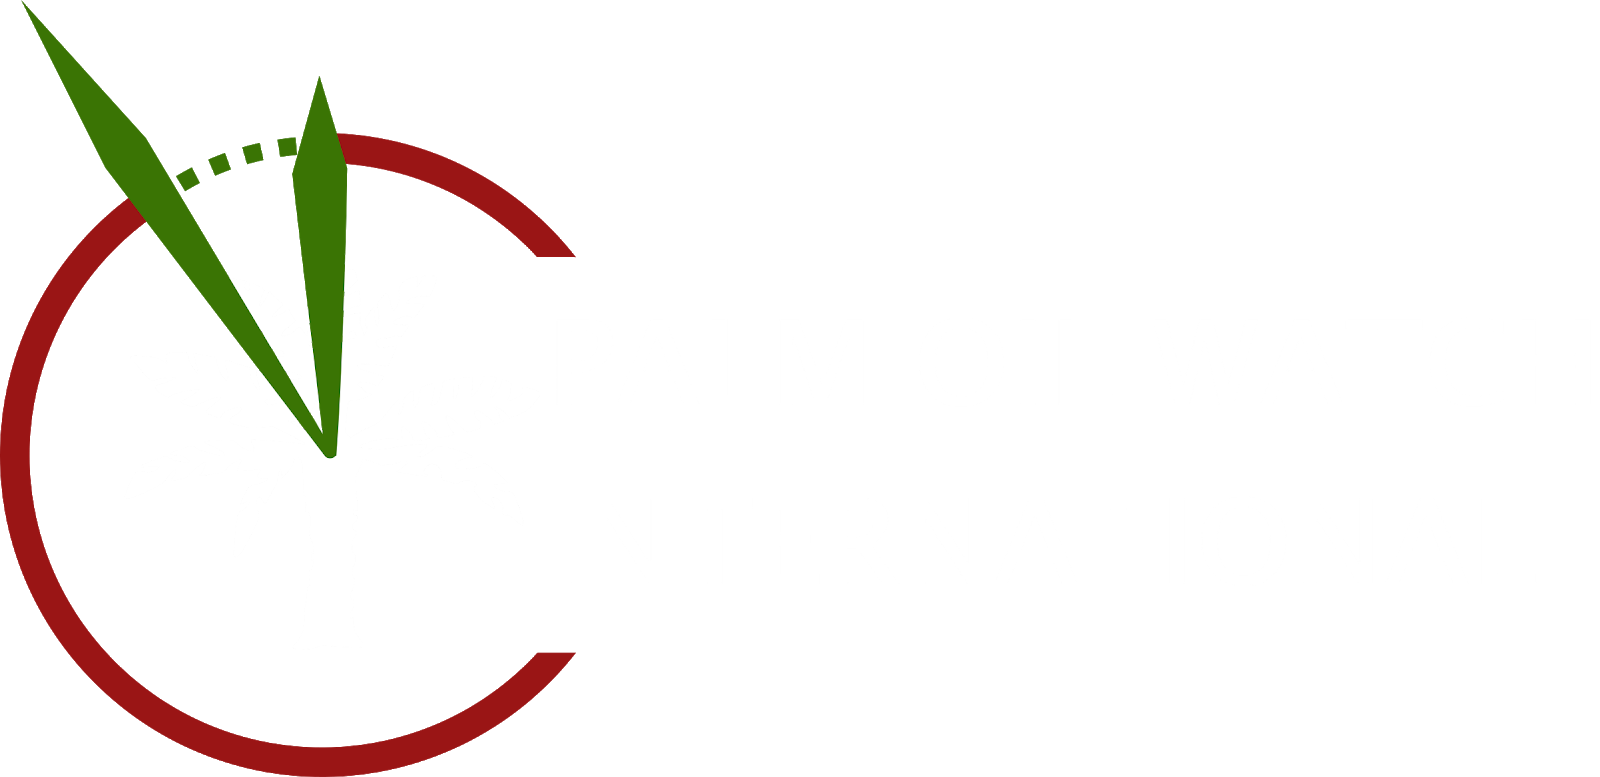 PALM OIL WATCH